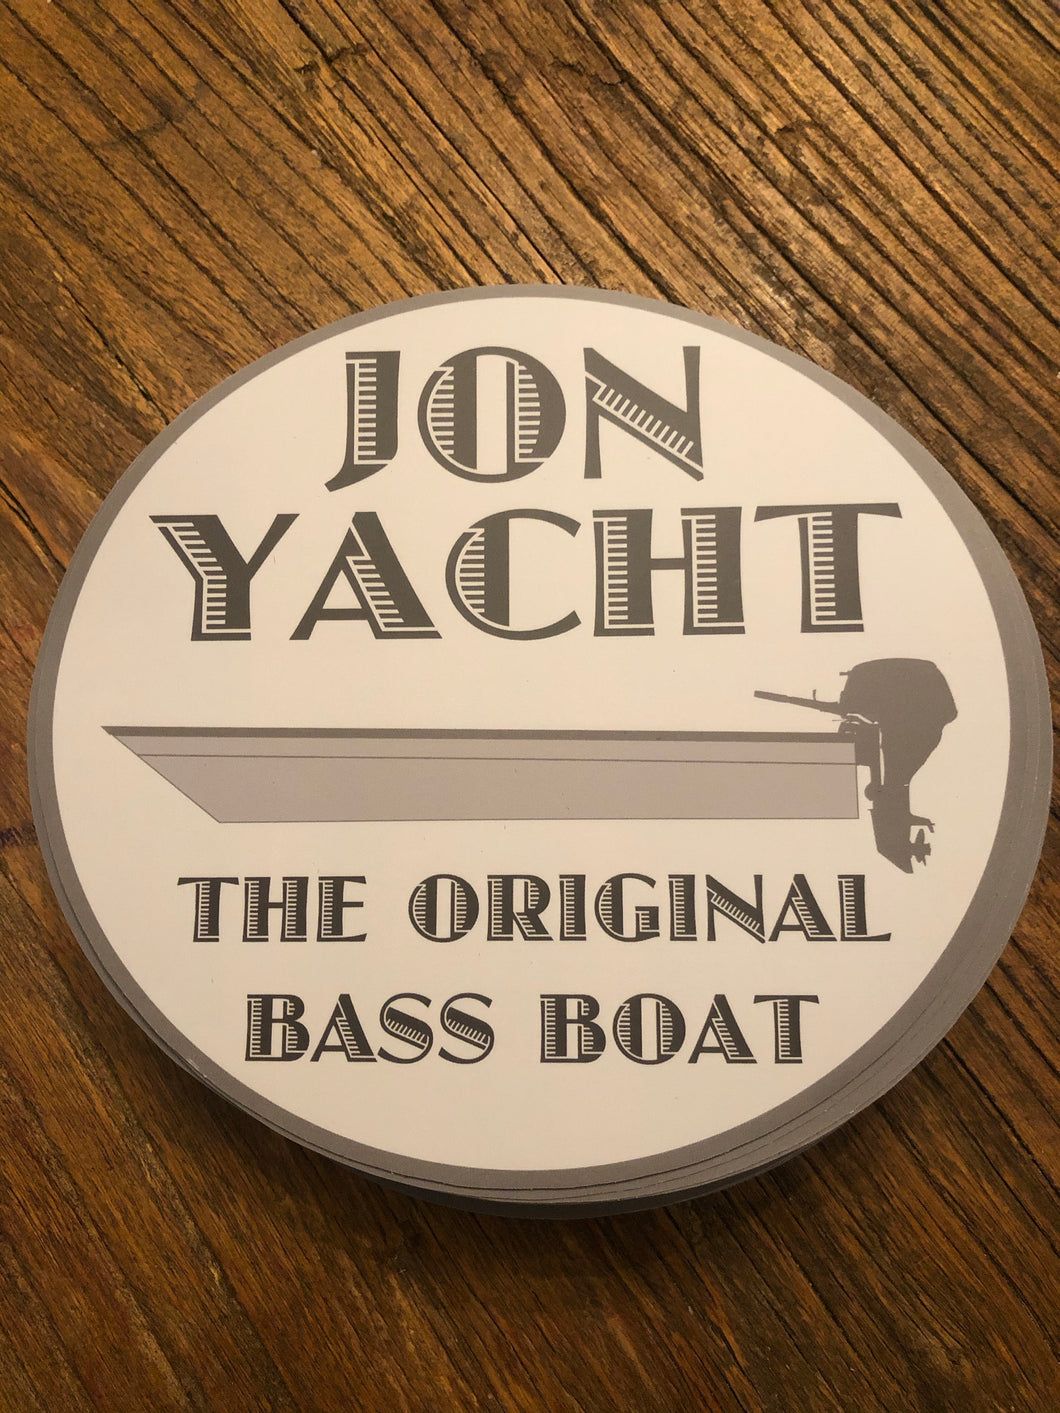 The Original Bass boat 6”